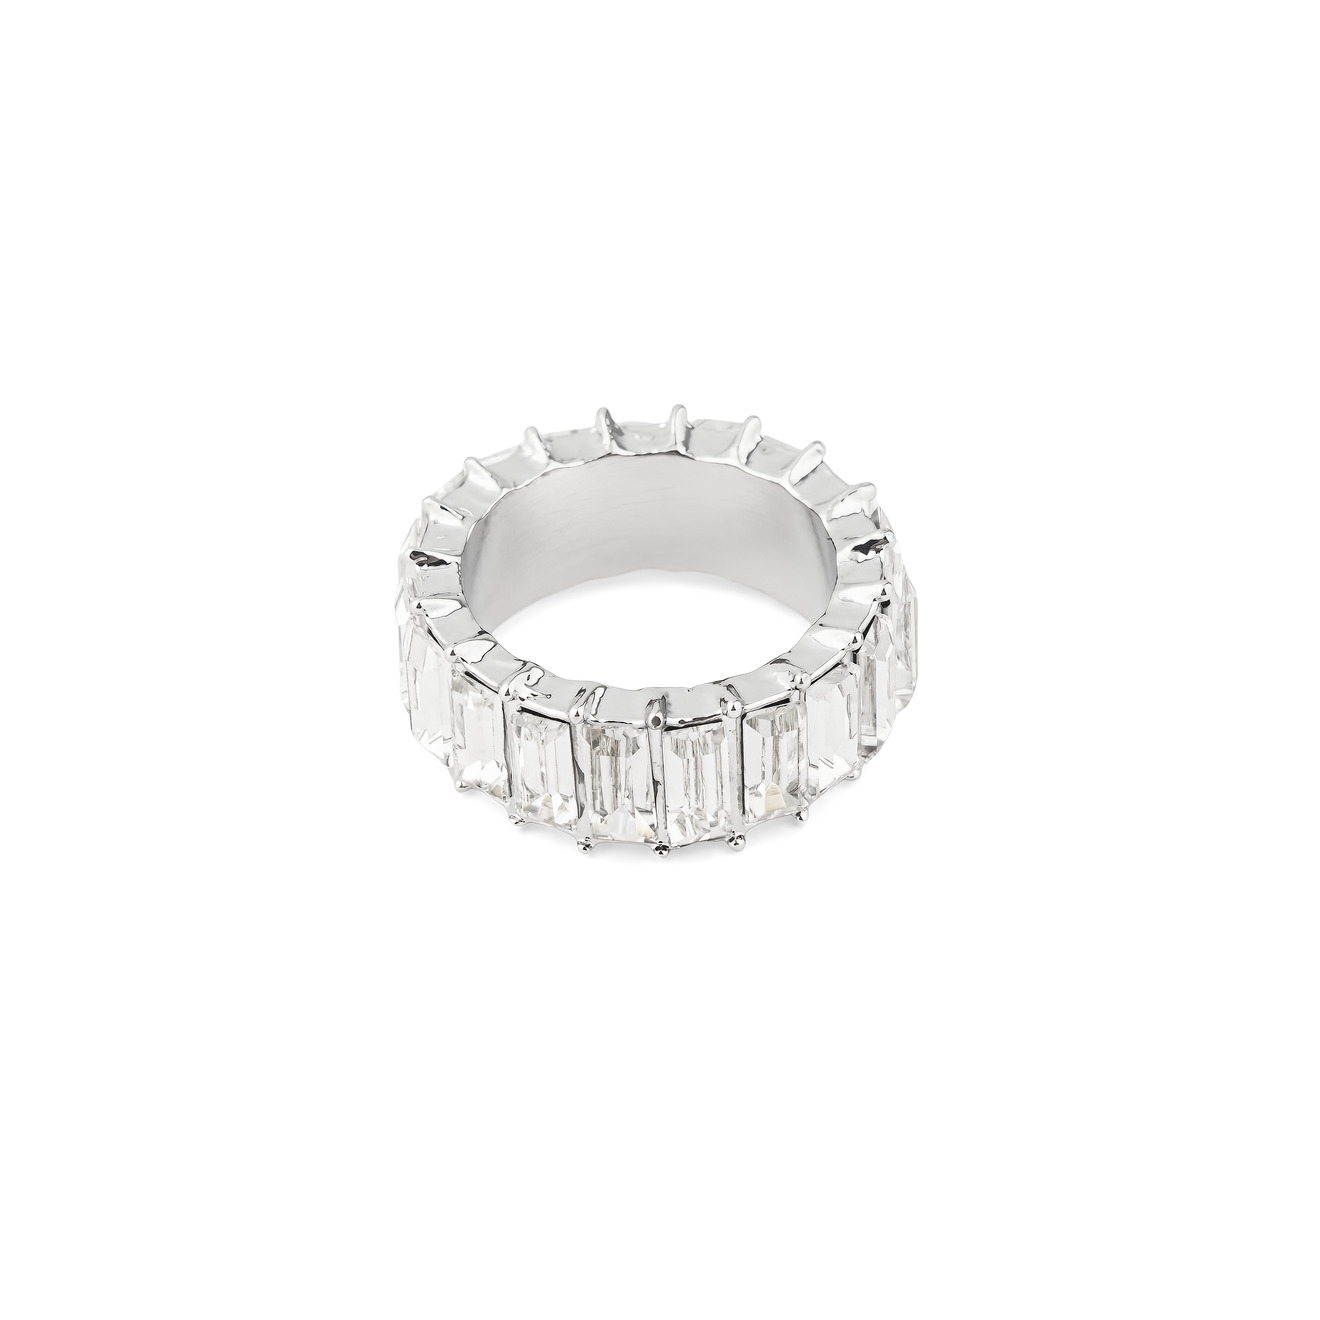 Herald Percy Серебристое кольцо с белыми кристаллами herald percy серебристое кольцо с овальным кристаллом